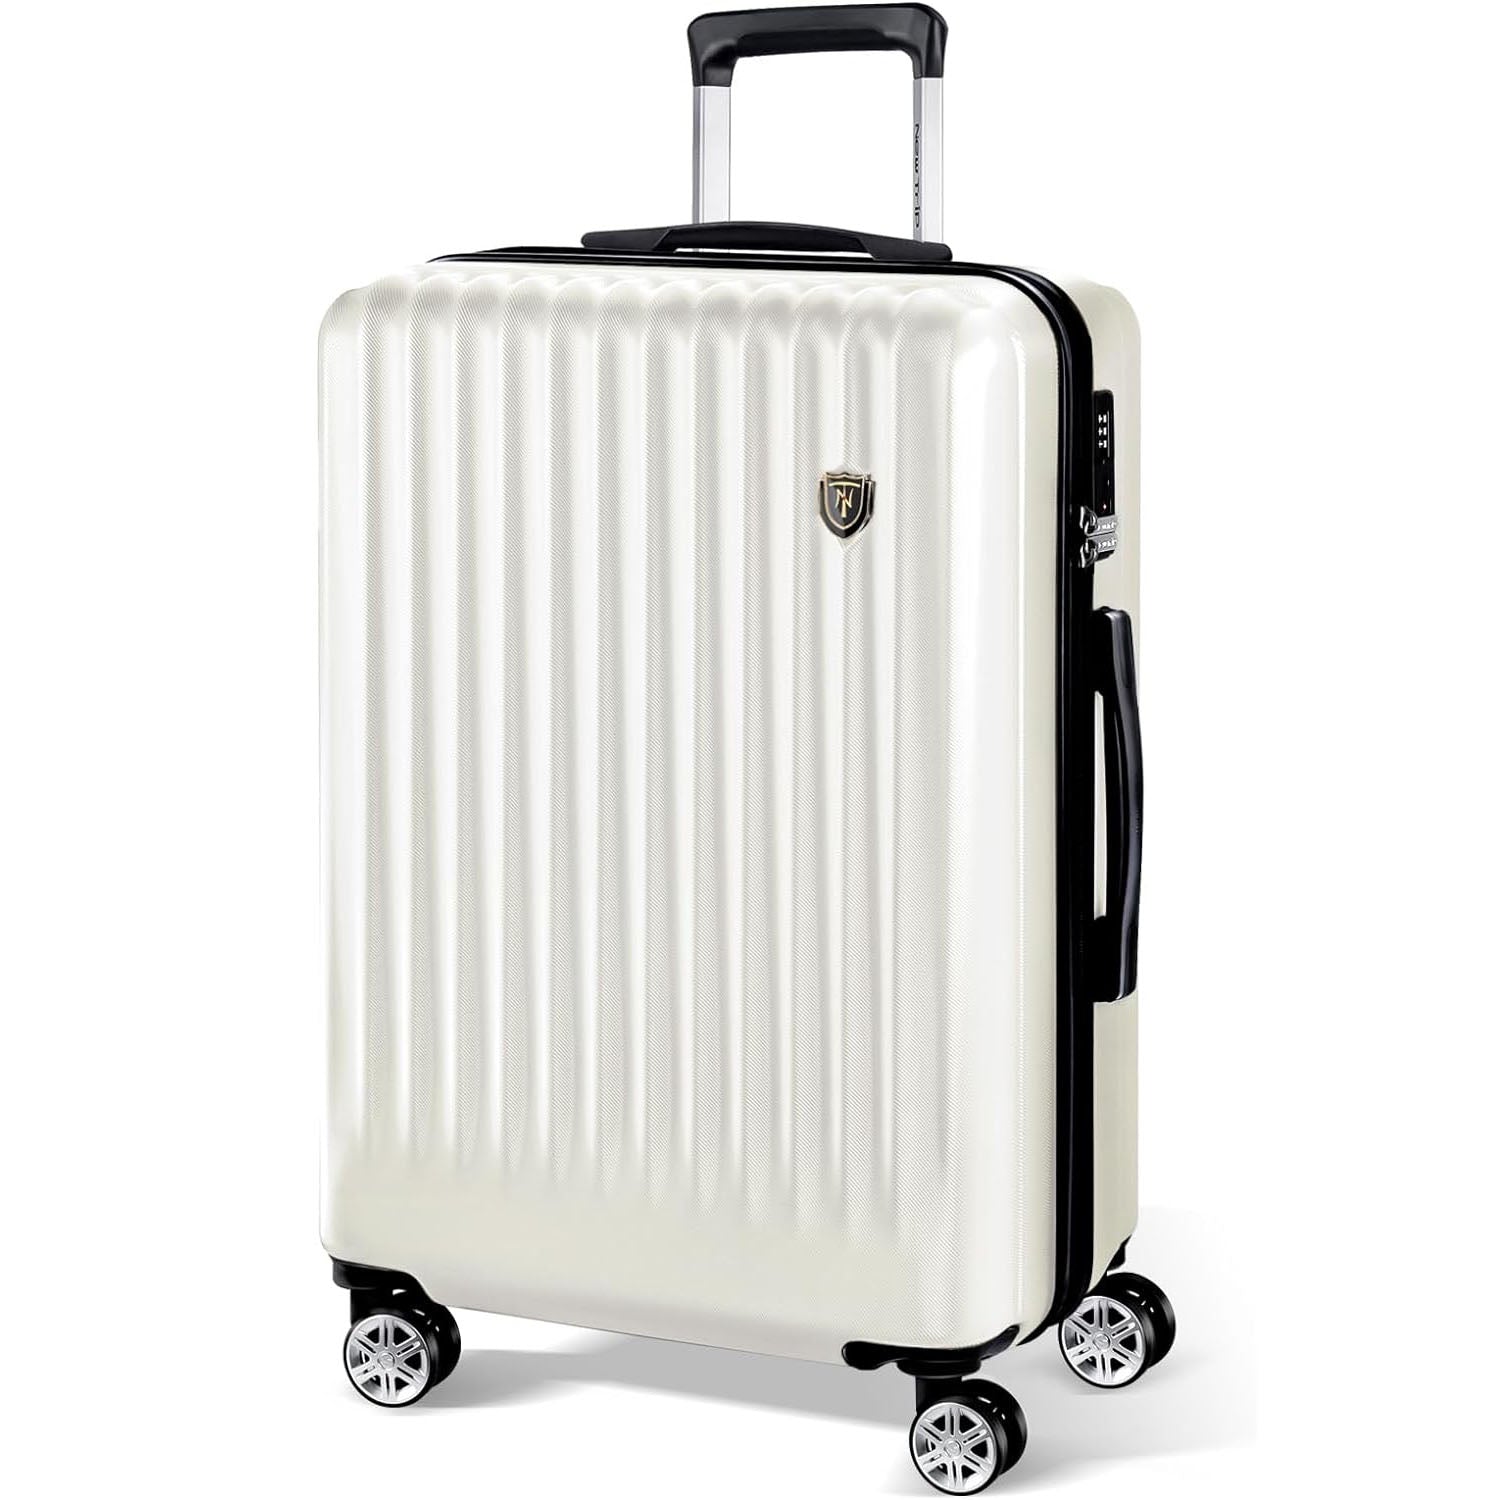 New Trip] スーツケース 大型 キャリーバッグ ホワイト S~Lサイズ 40~100L